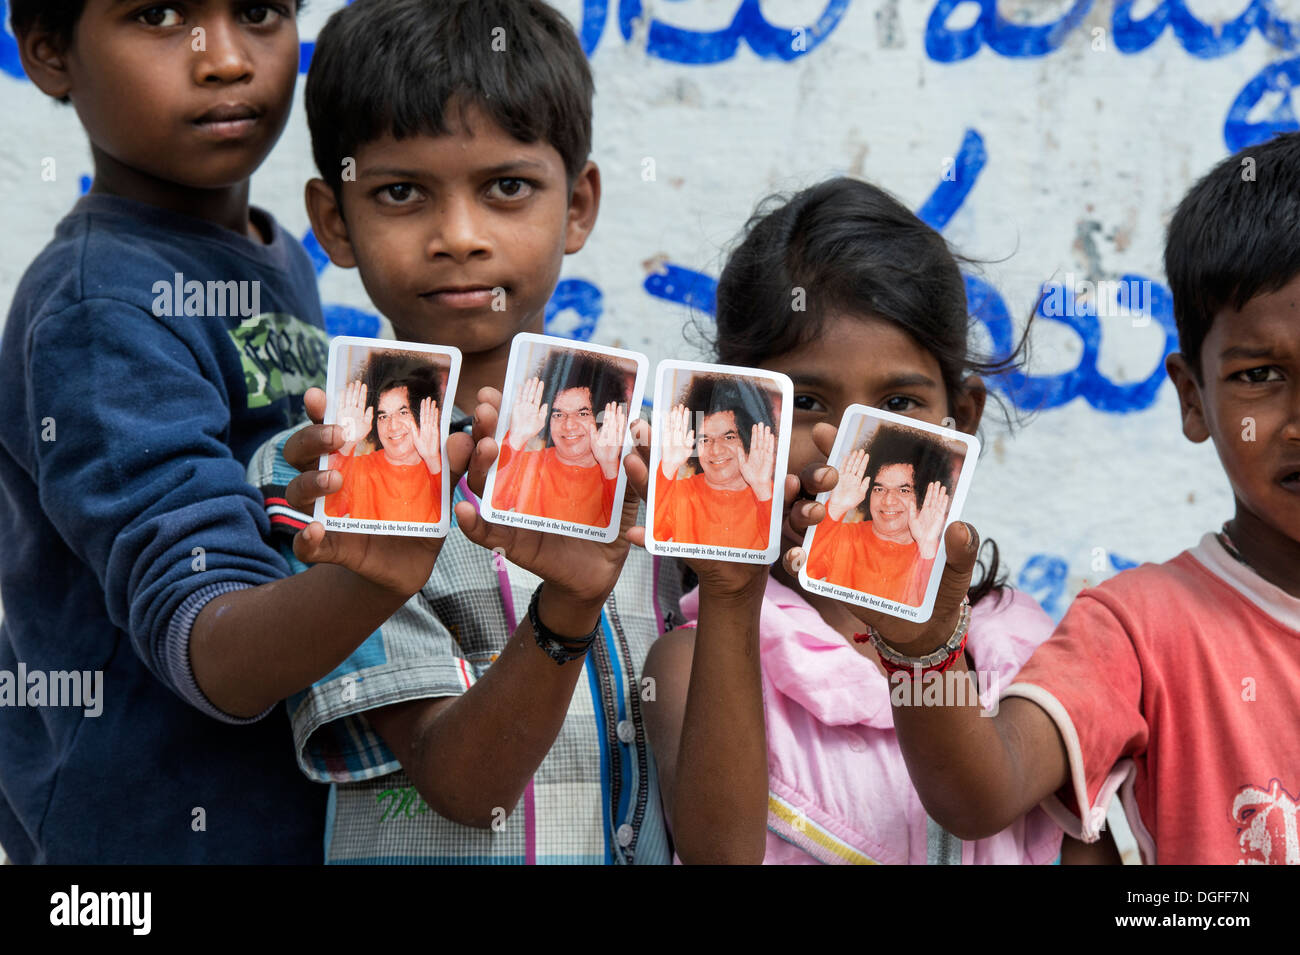 Four Indian children holding up photos of Sri Sathya Sai Baba in a rural Indian village. Andhra Pradesh, India Stock Photo